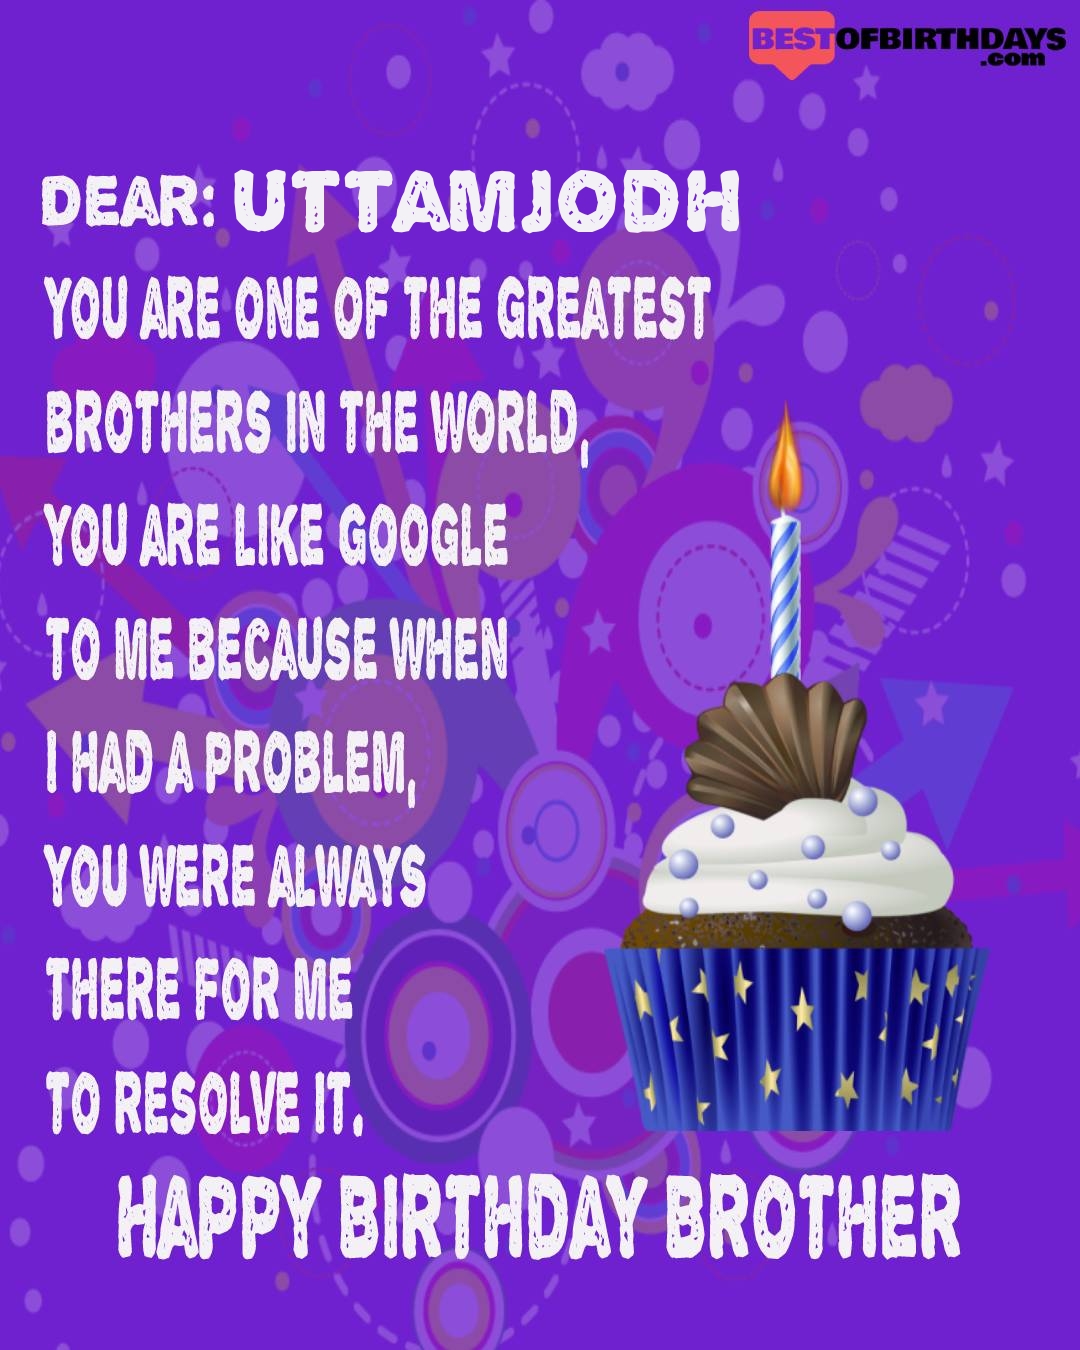 Happy birthday uttamjodh bhai brother bro